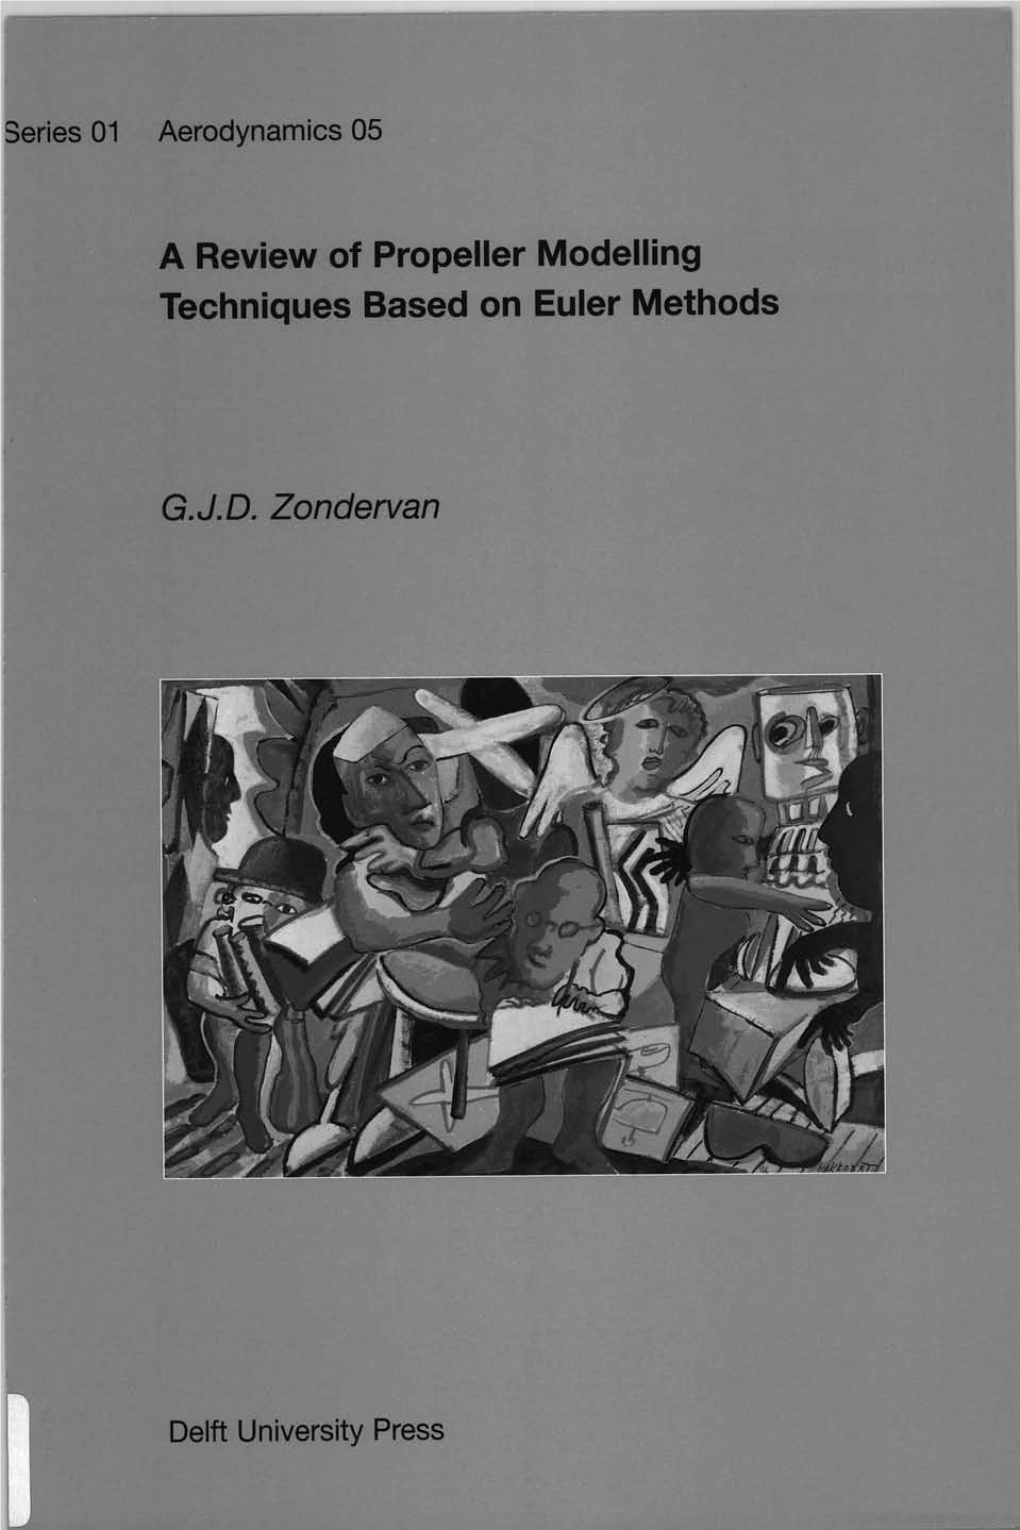 A Review of Propeller Modelling Techniques Based on Euler Methods